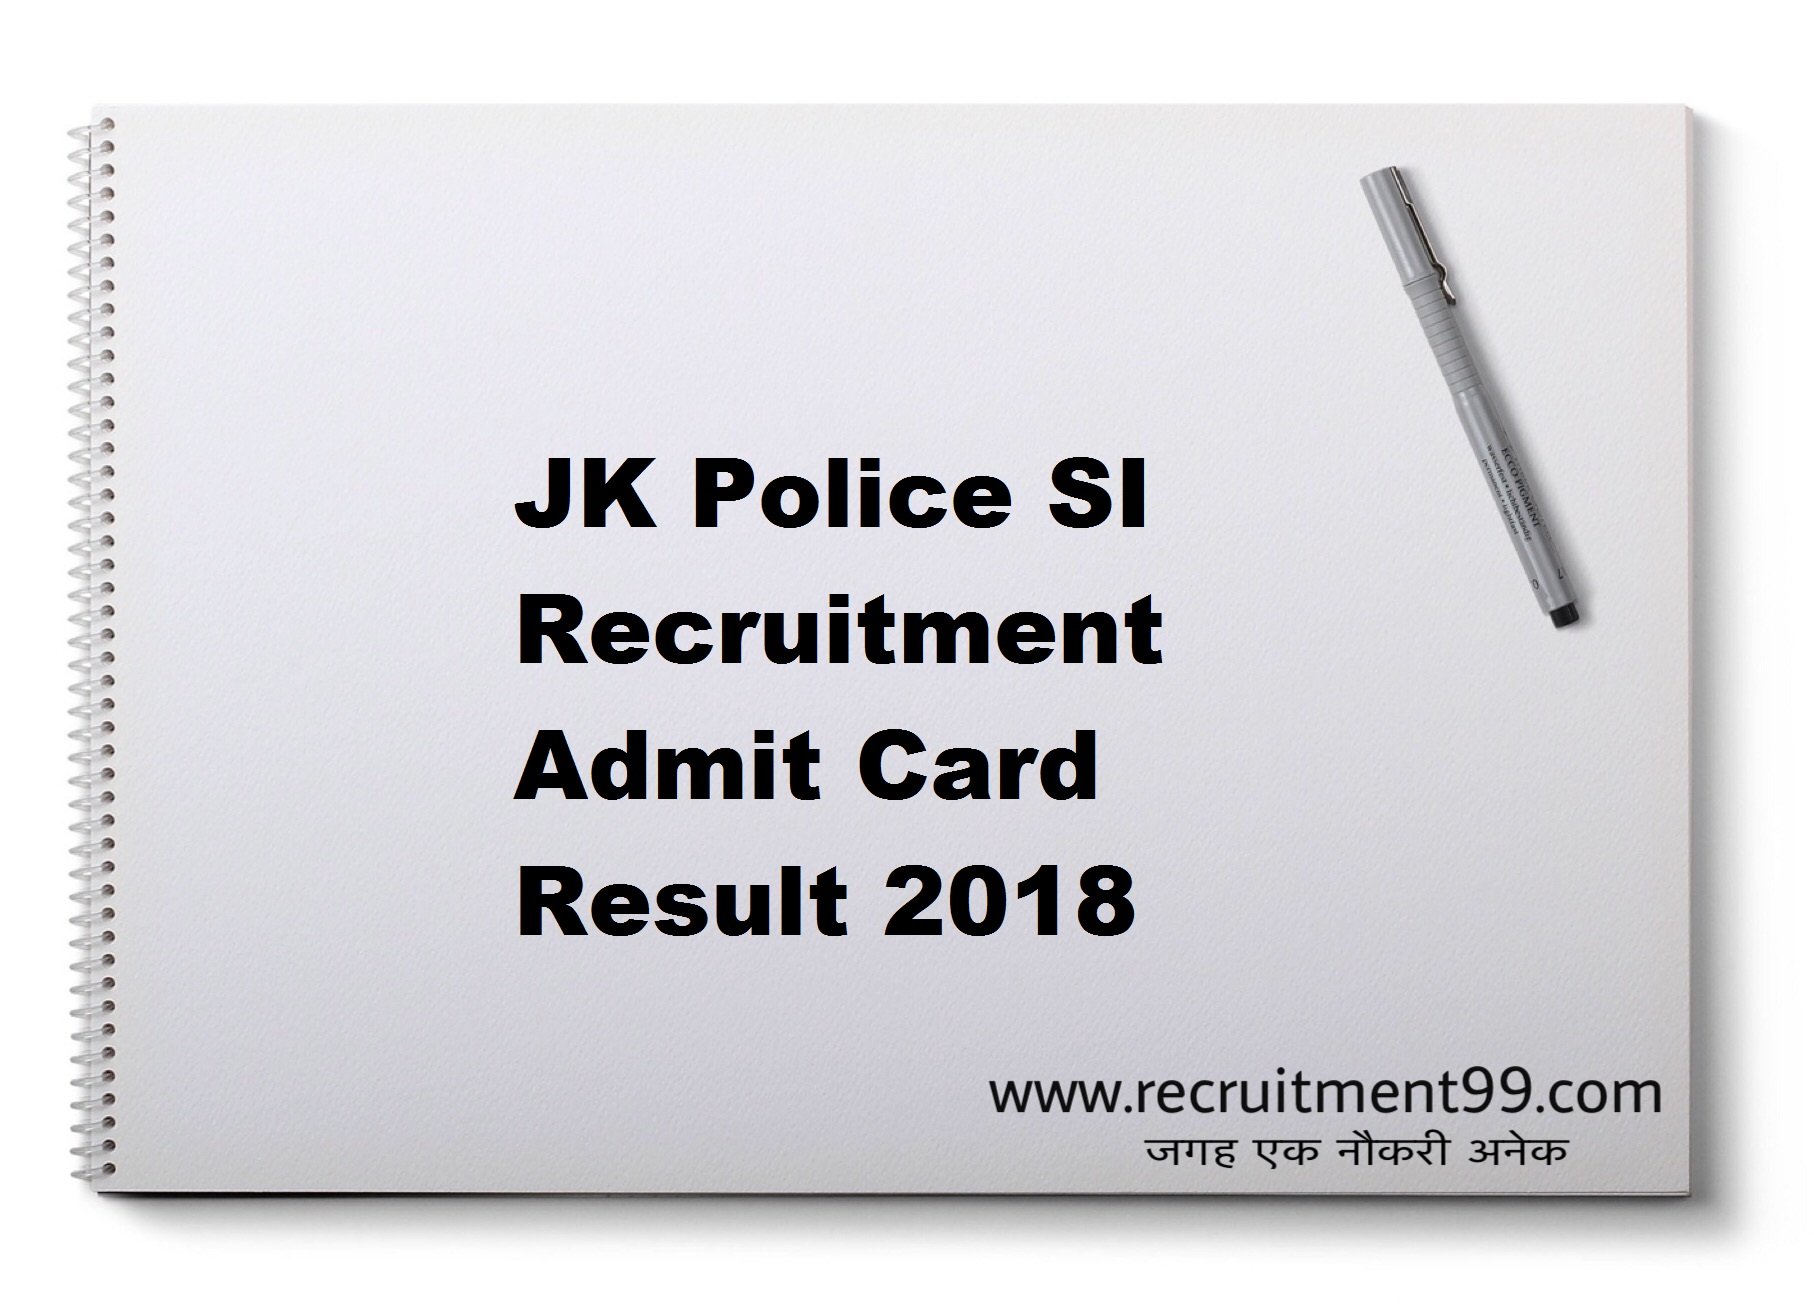 JK Police SI Recruitment Admit Card Result 2018